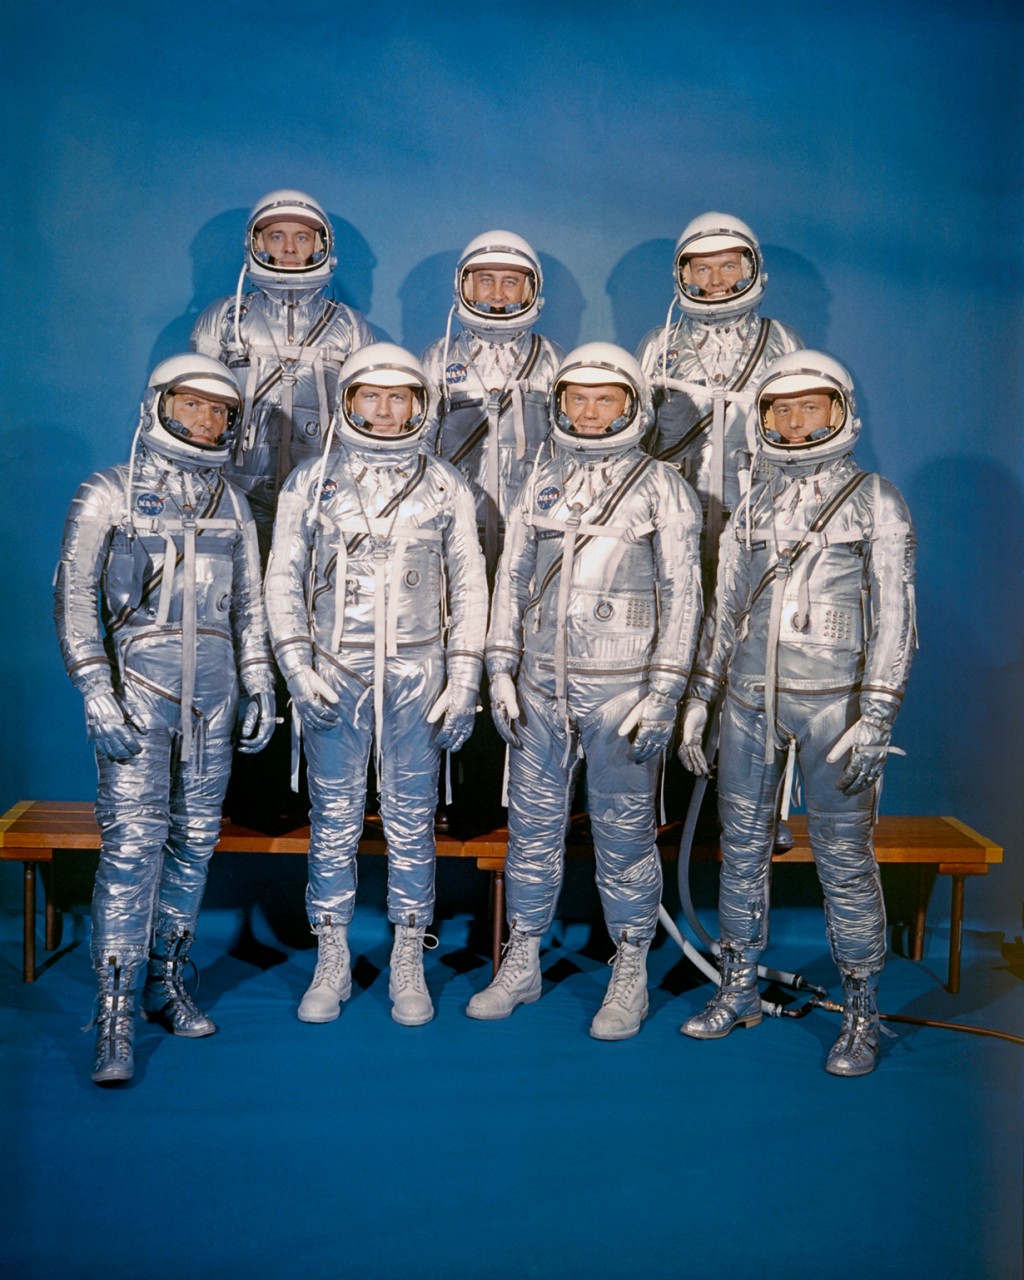 9 апреля 1959 года. Первый отряд астронавтов США: Алан Шепард, Вирджил Гриссом, Гордон Купер, Уолтер Ширра, Дональд Слейтон, Джон Гленн, Скотт Карпентер. (NASA on The Commons)